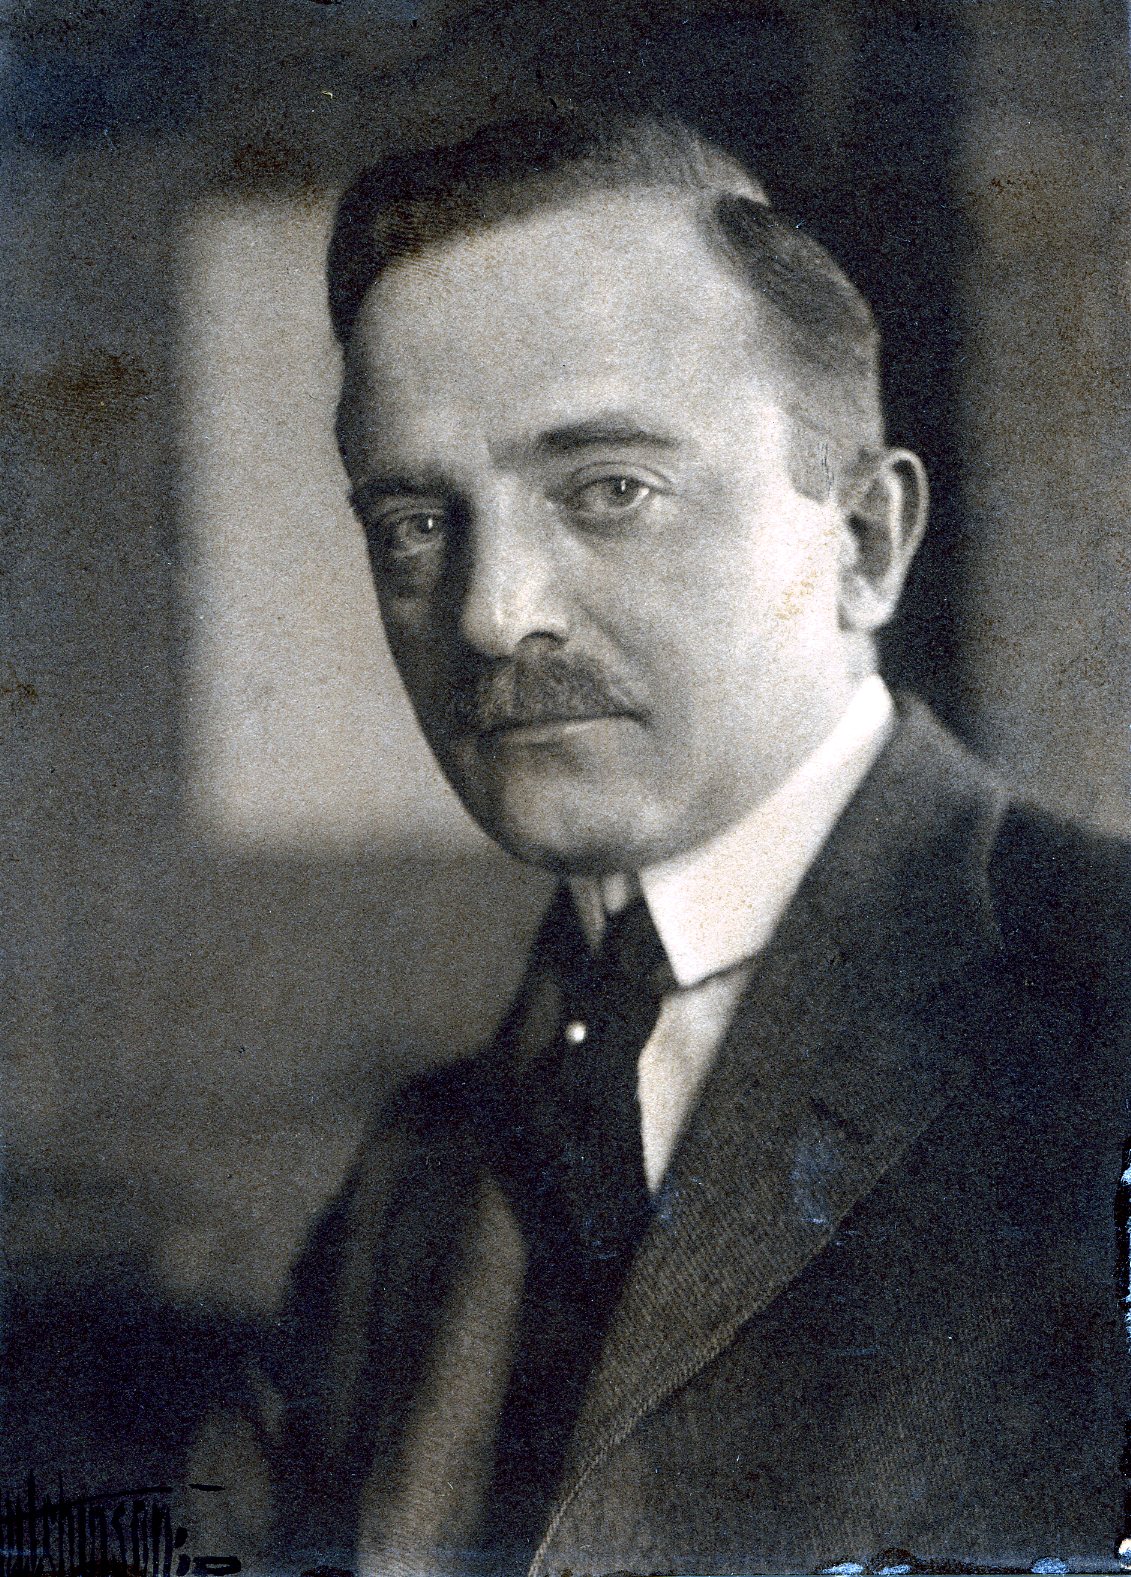 Member portrait of Alfred Hoyt Granger